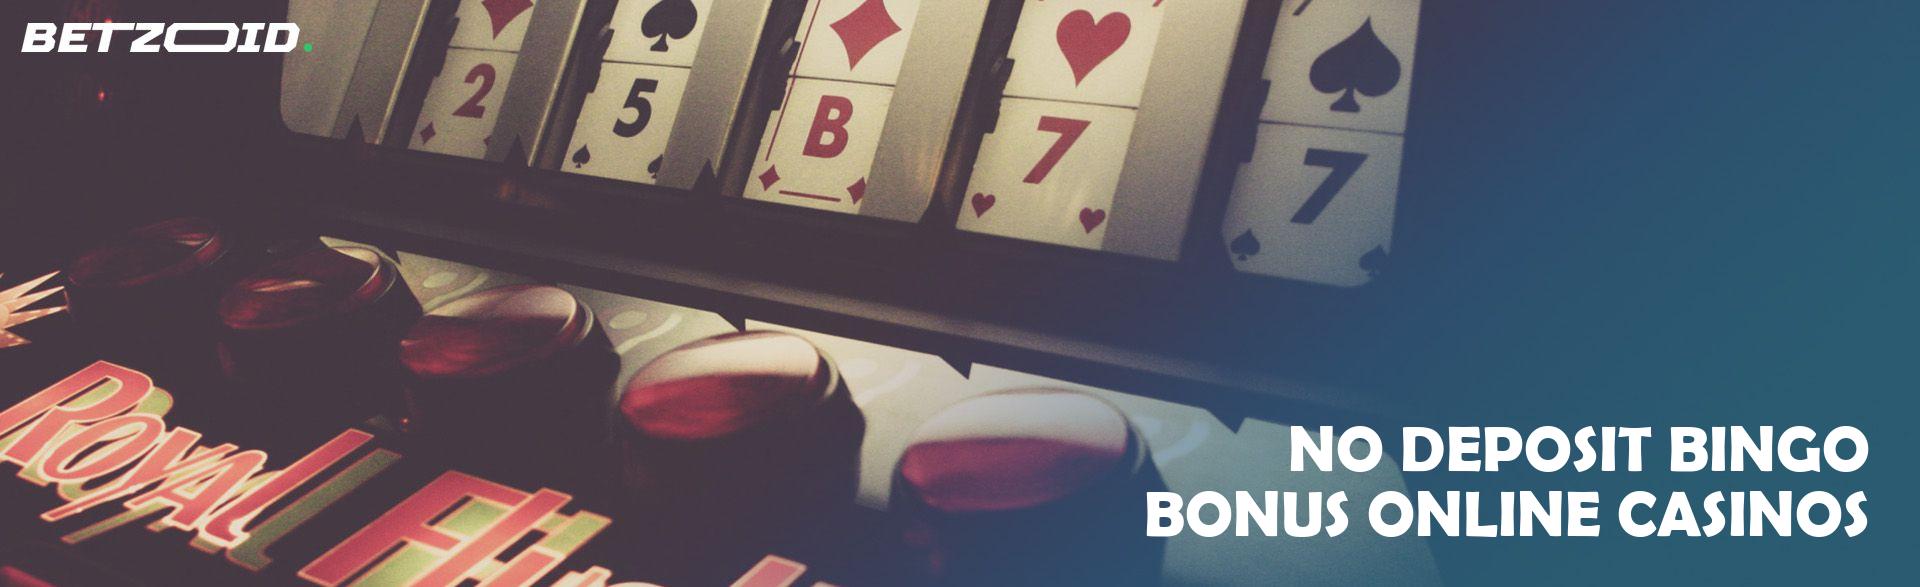 No Deposit Bingo Bonus Online Casinos.